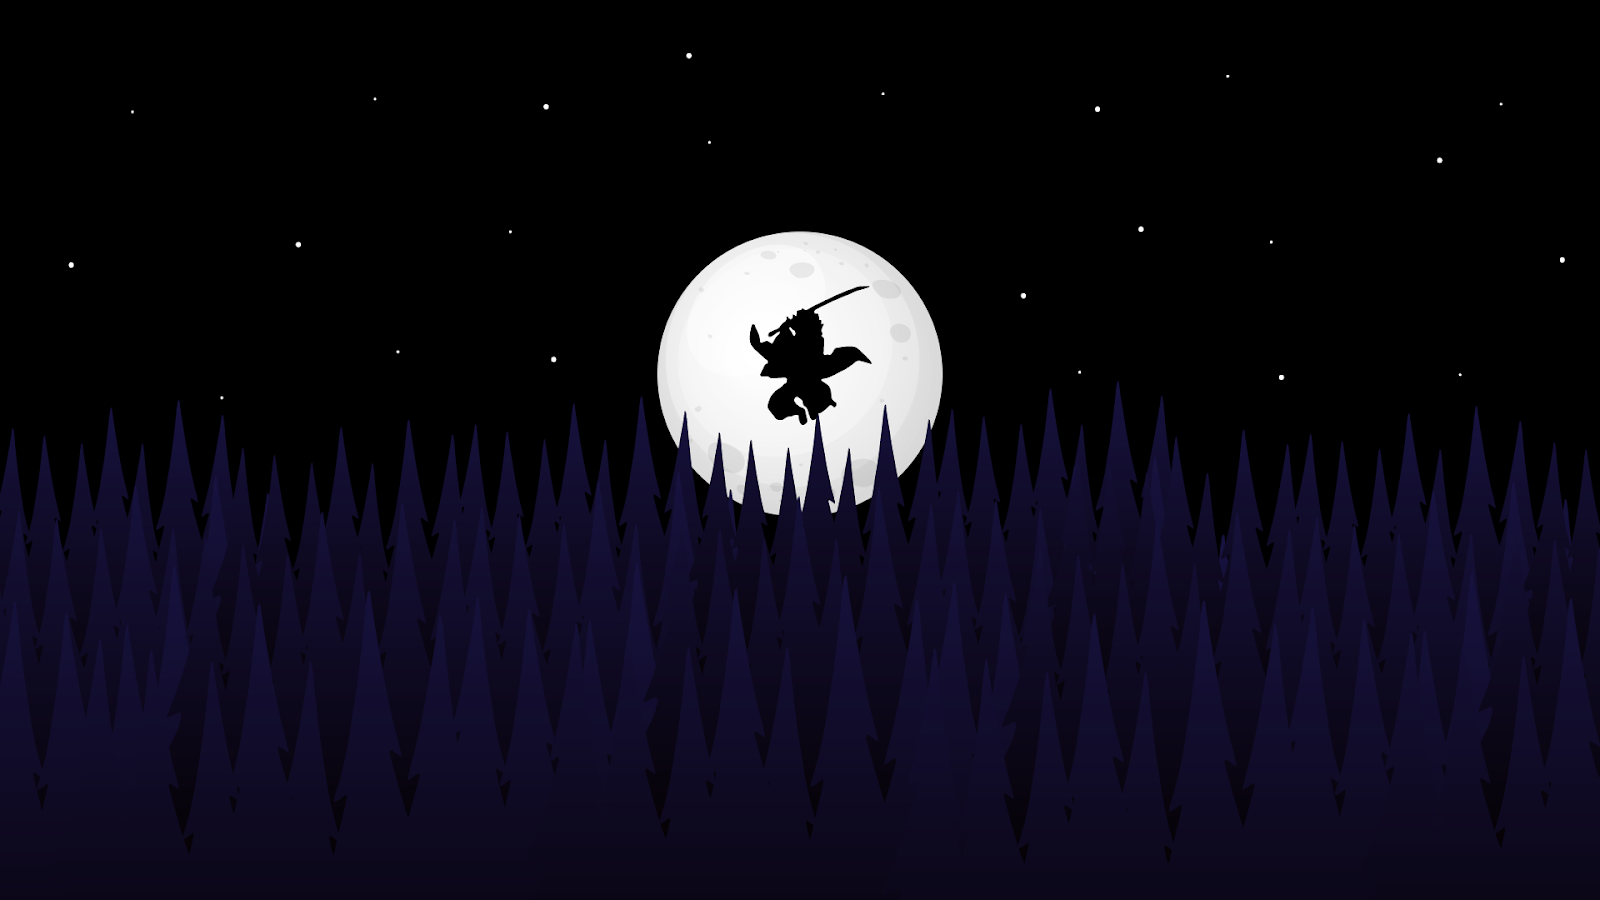 demon slayer anime wallpaper 4k tanjiro kamado silhouette forest night full moon